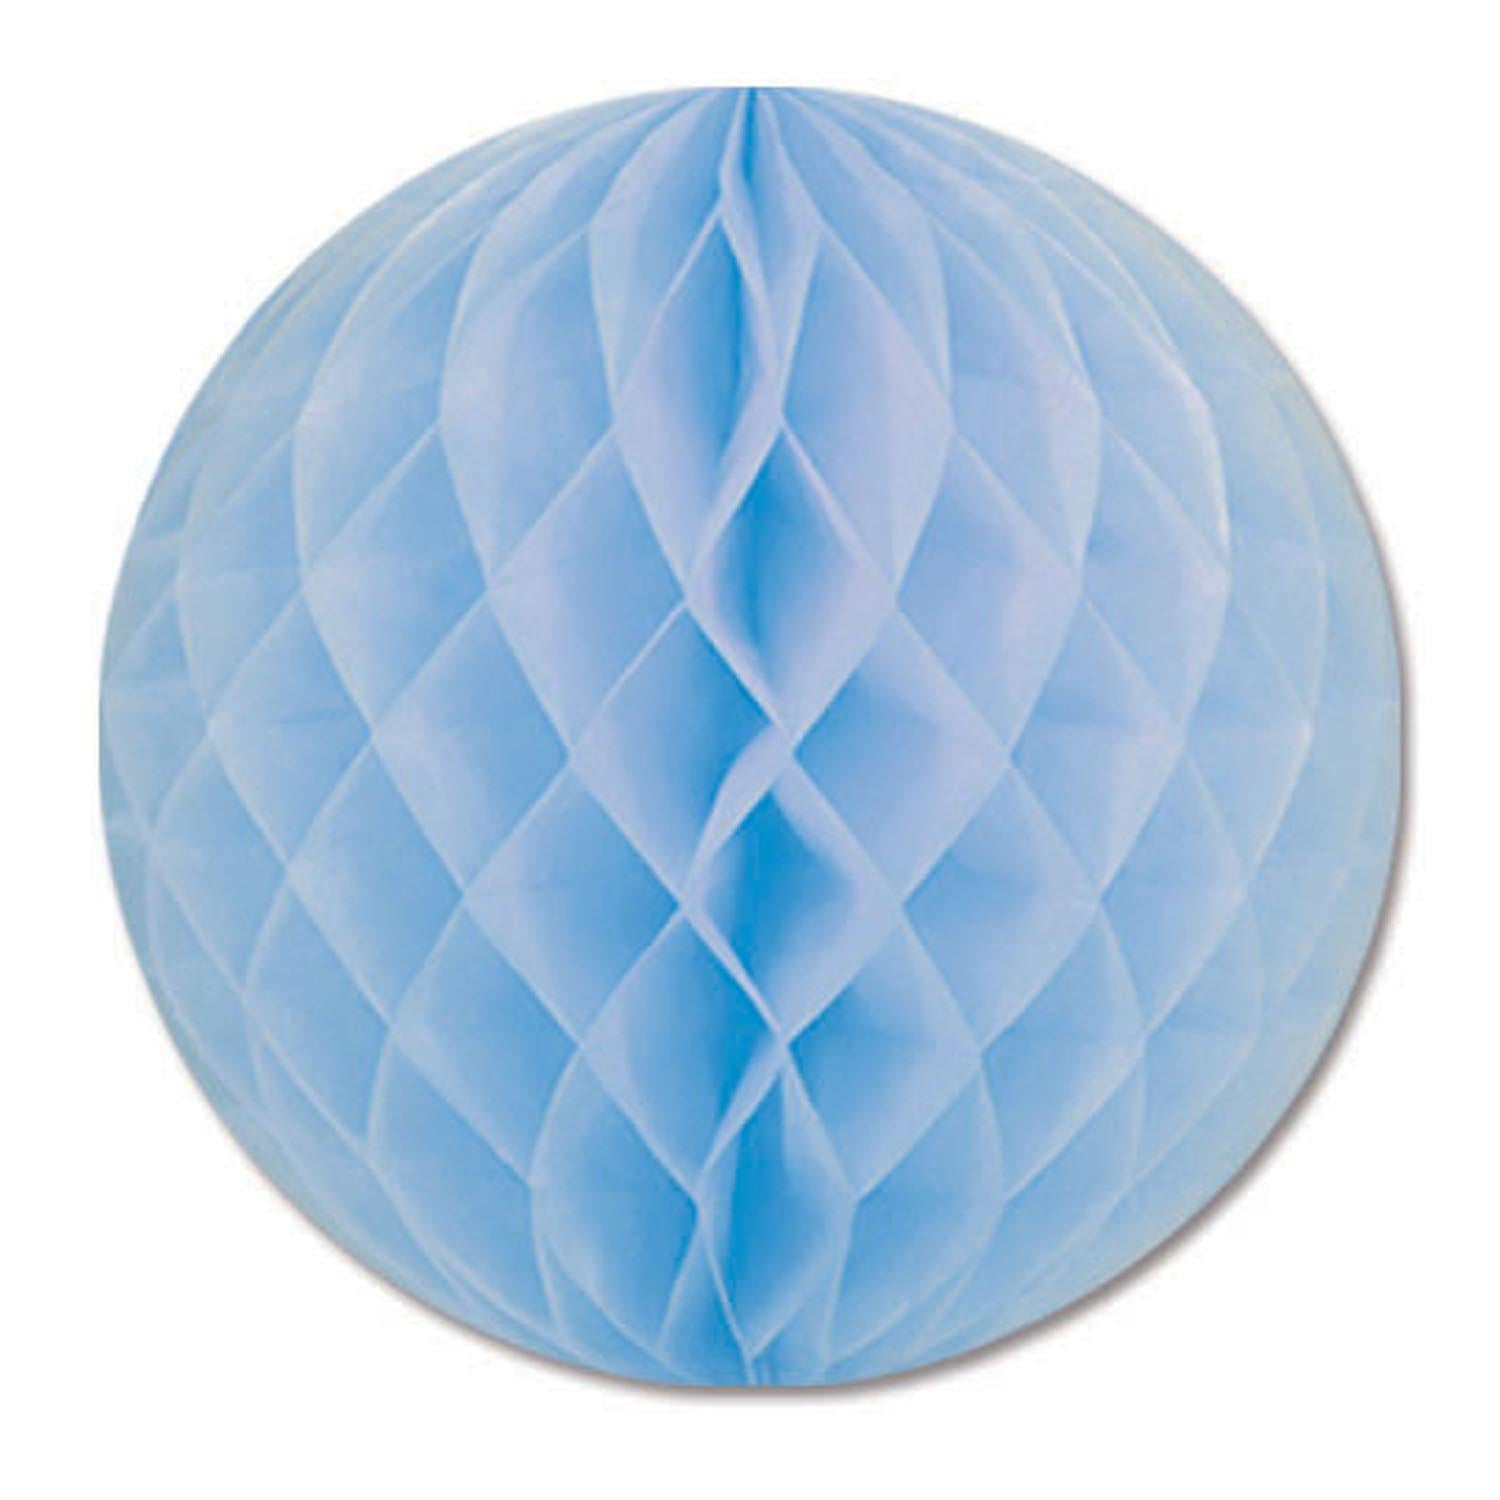 Beistle Party Tissue Ball - Light blue